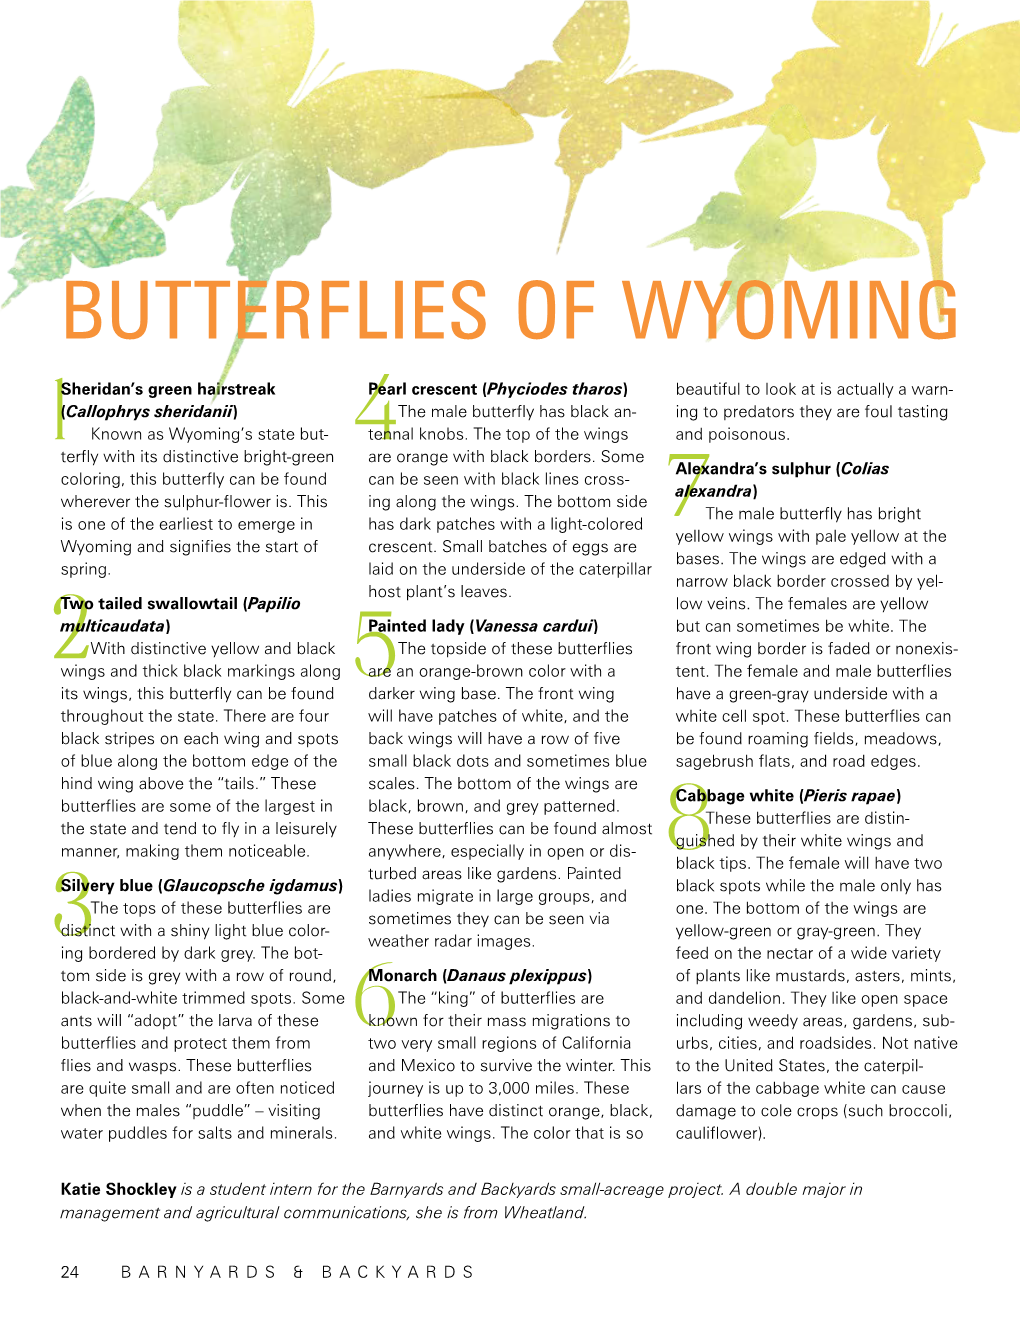 Butterflies of Wyoming